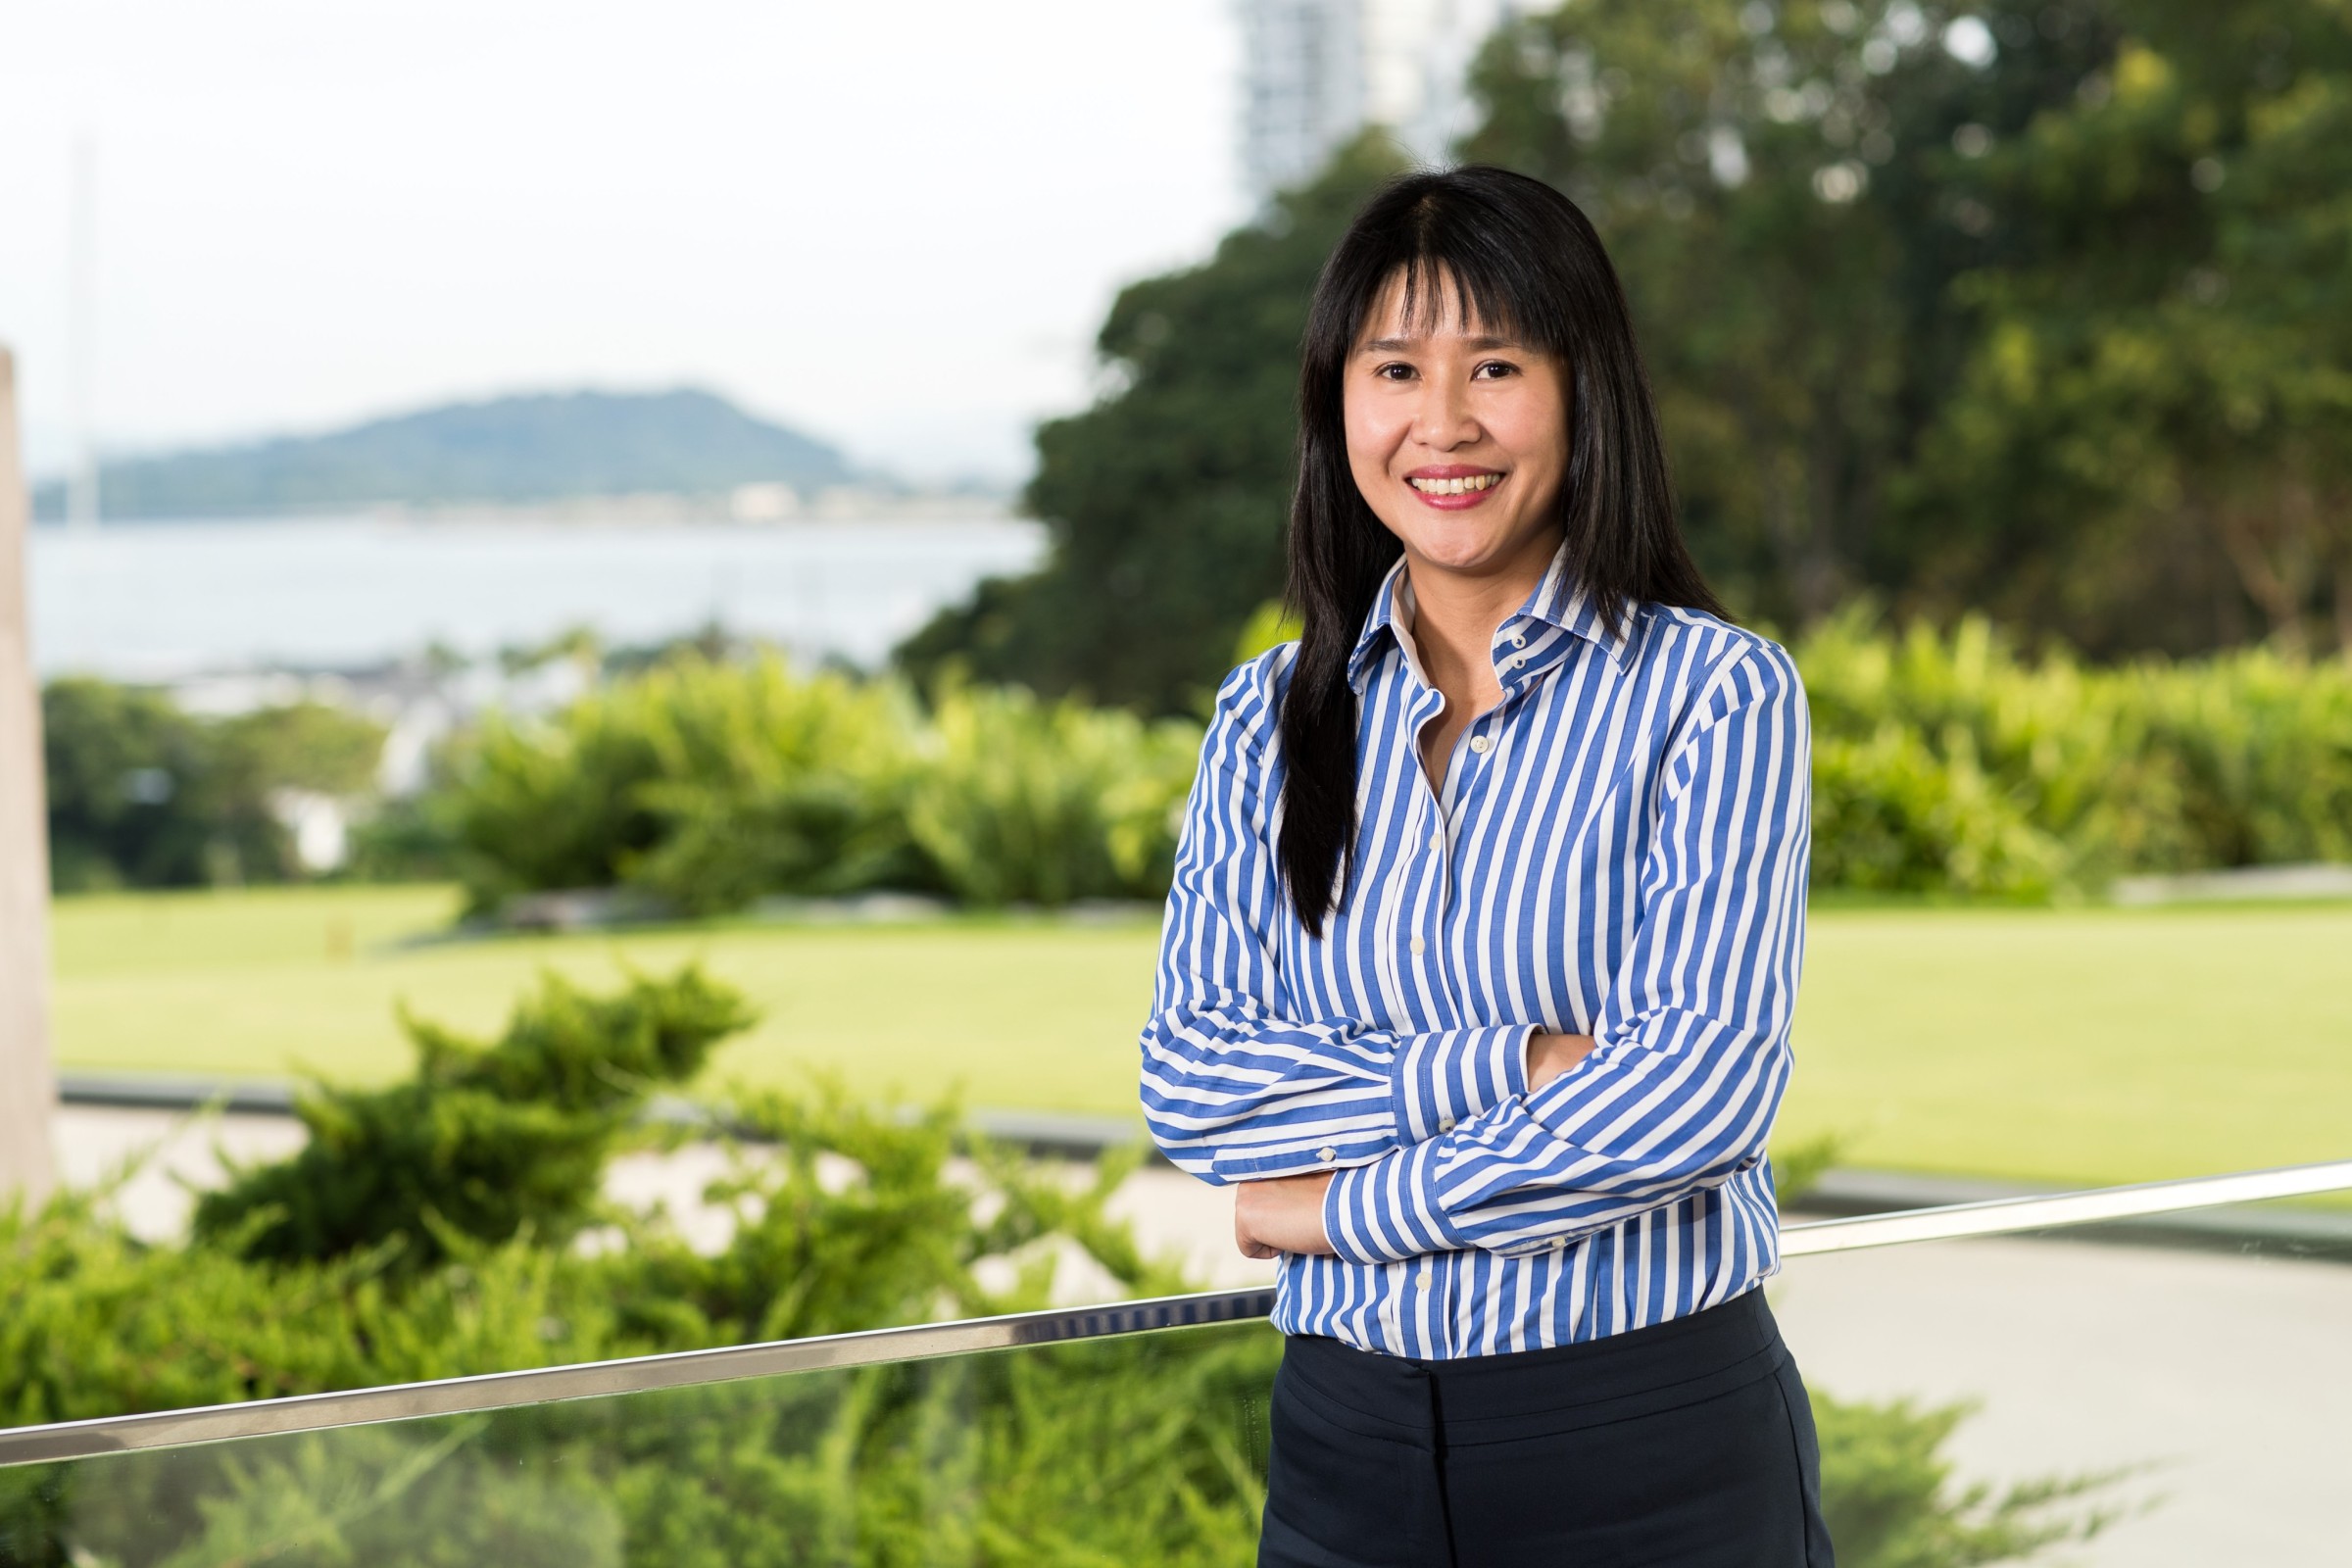 Introducing Nicole Threw, Director of Golf at Singapore’s Sentosa Golf Club